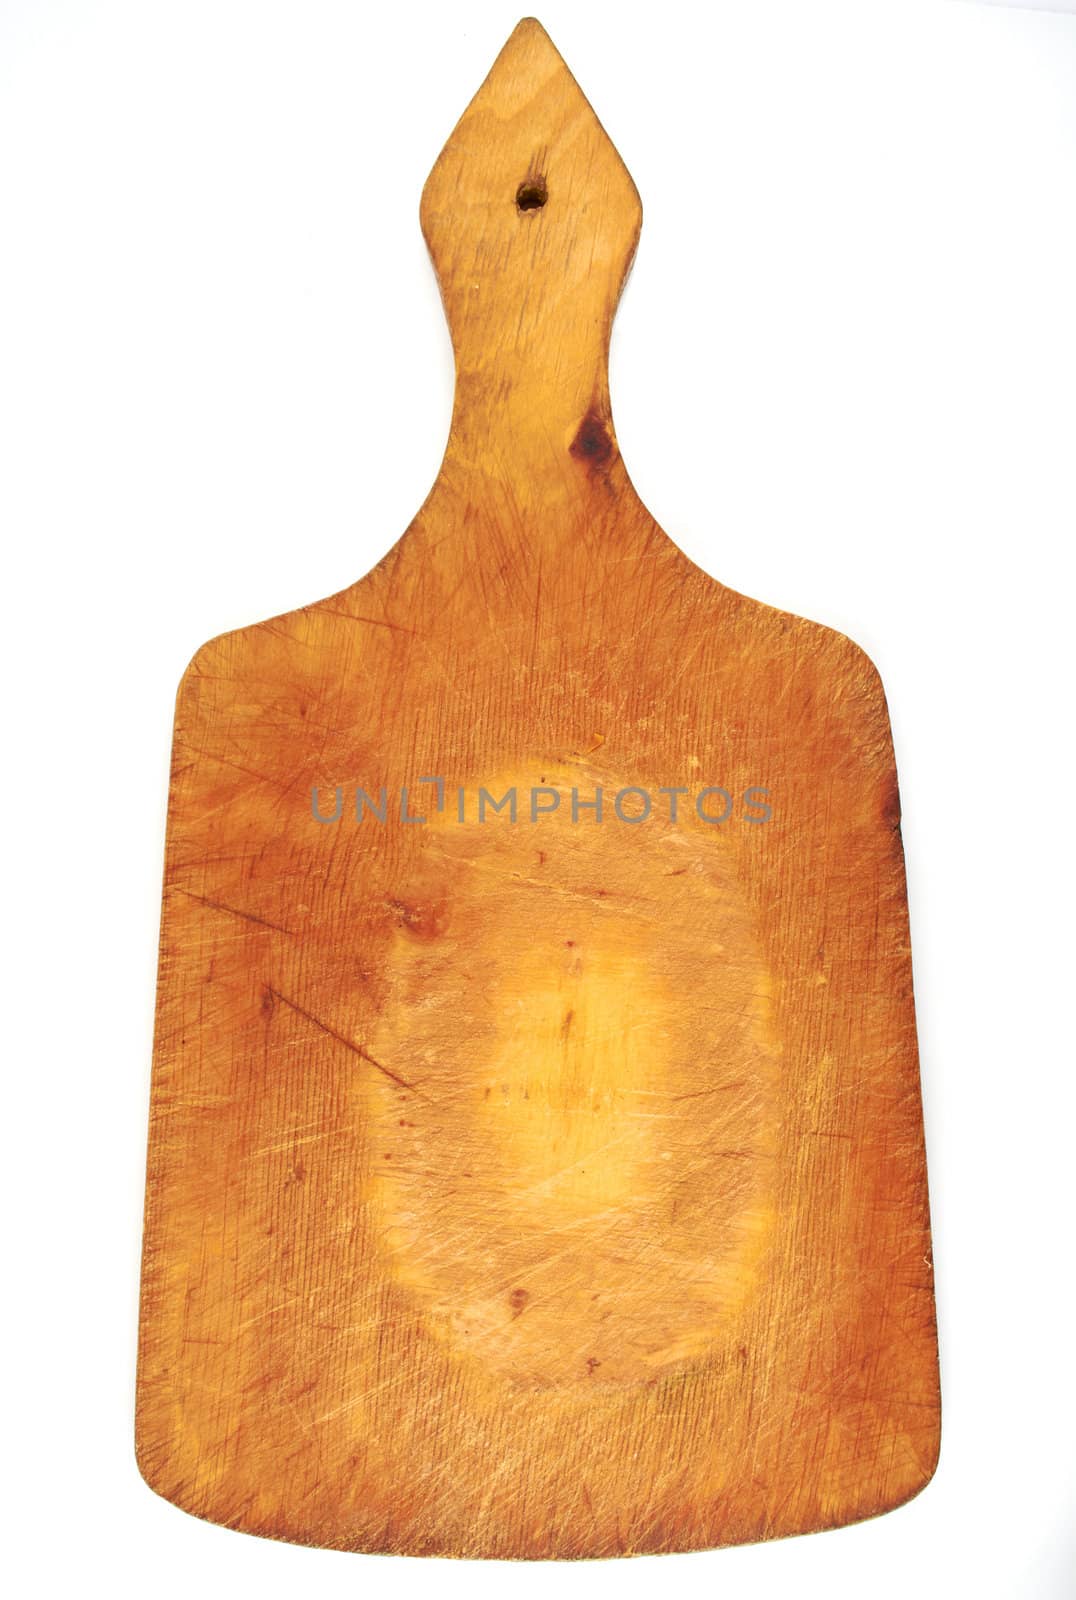 A cutting board by subos